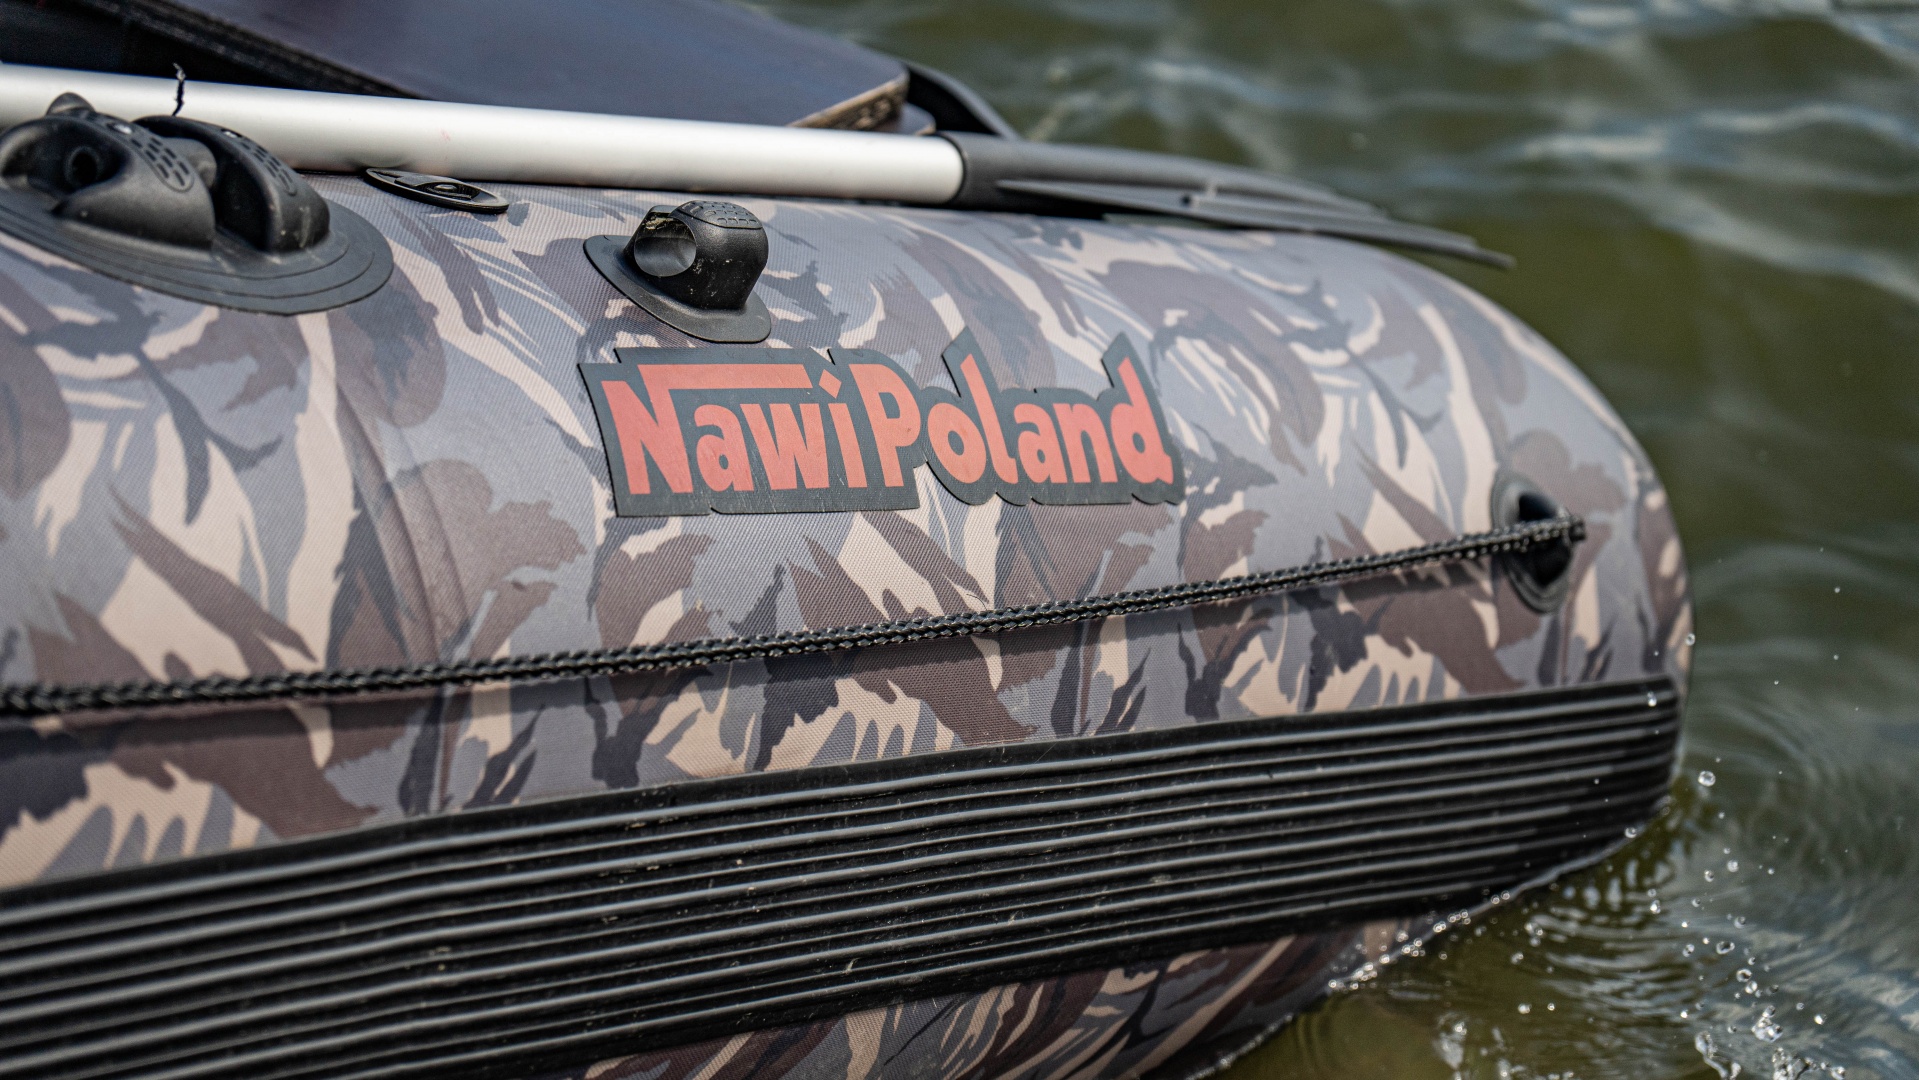 NawiPoland CAT 220 Inflatable Boat  - Catamaran